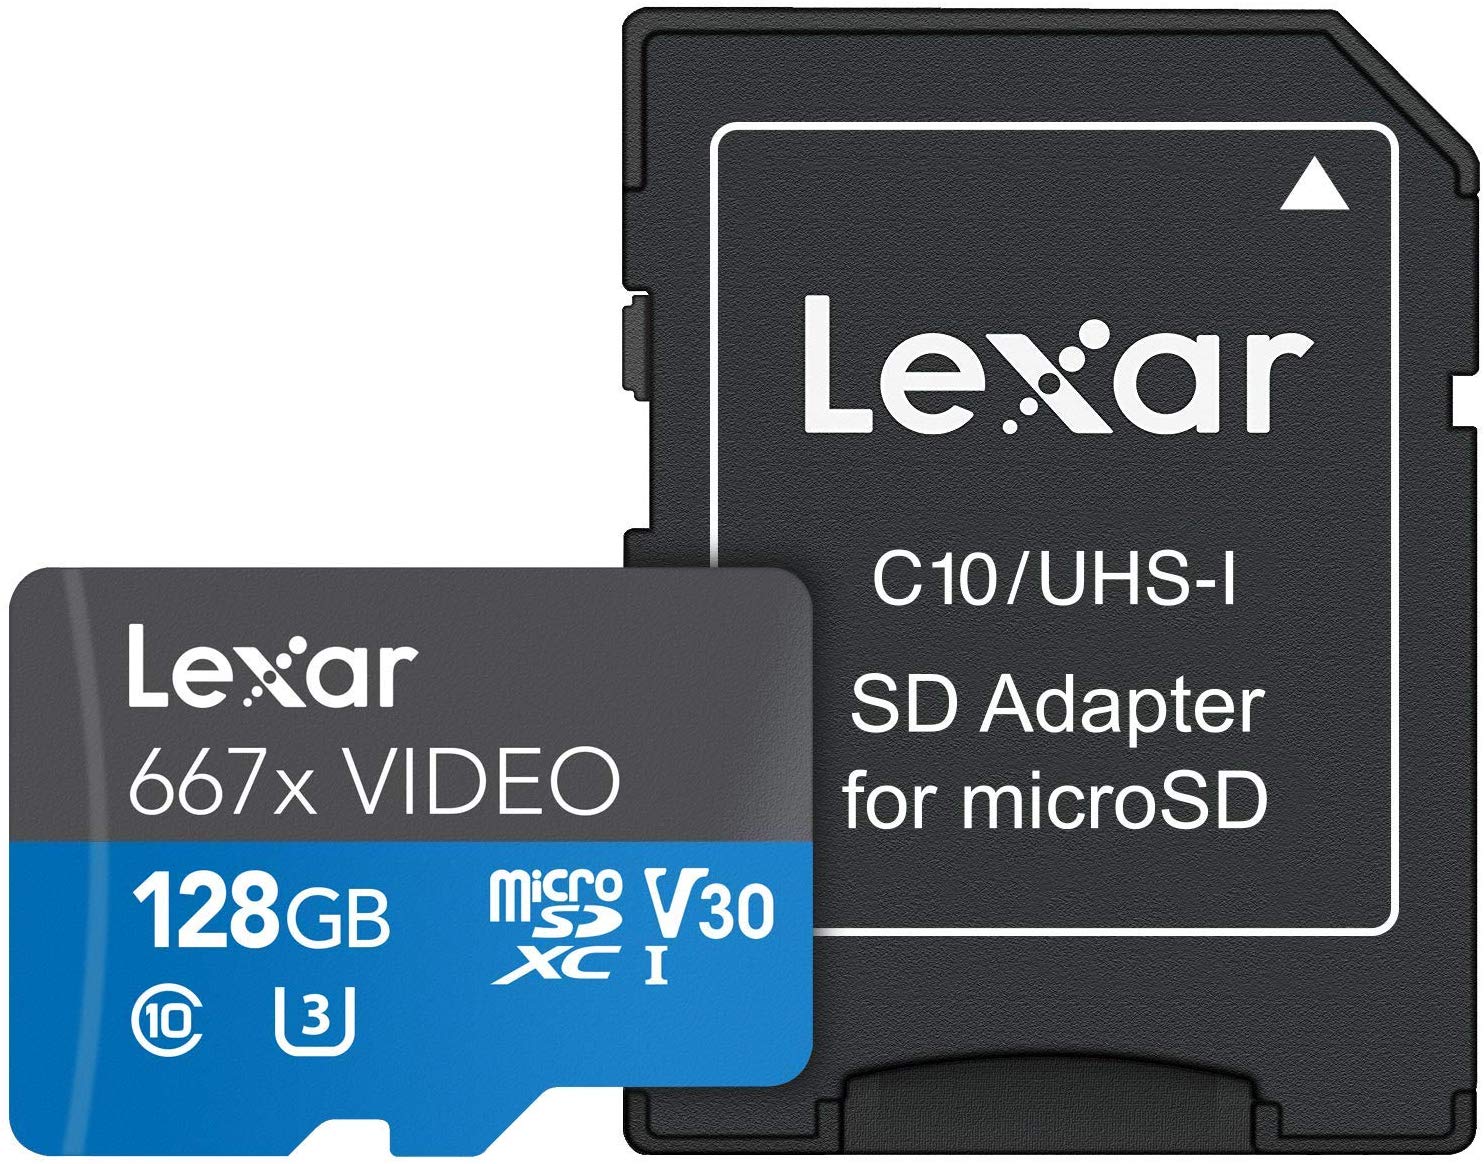 Lexar 667x Video microSDXC UHS-I Memory Card For Action Cameras | Ritz